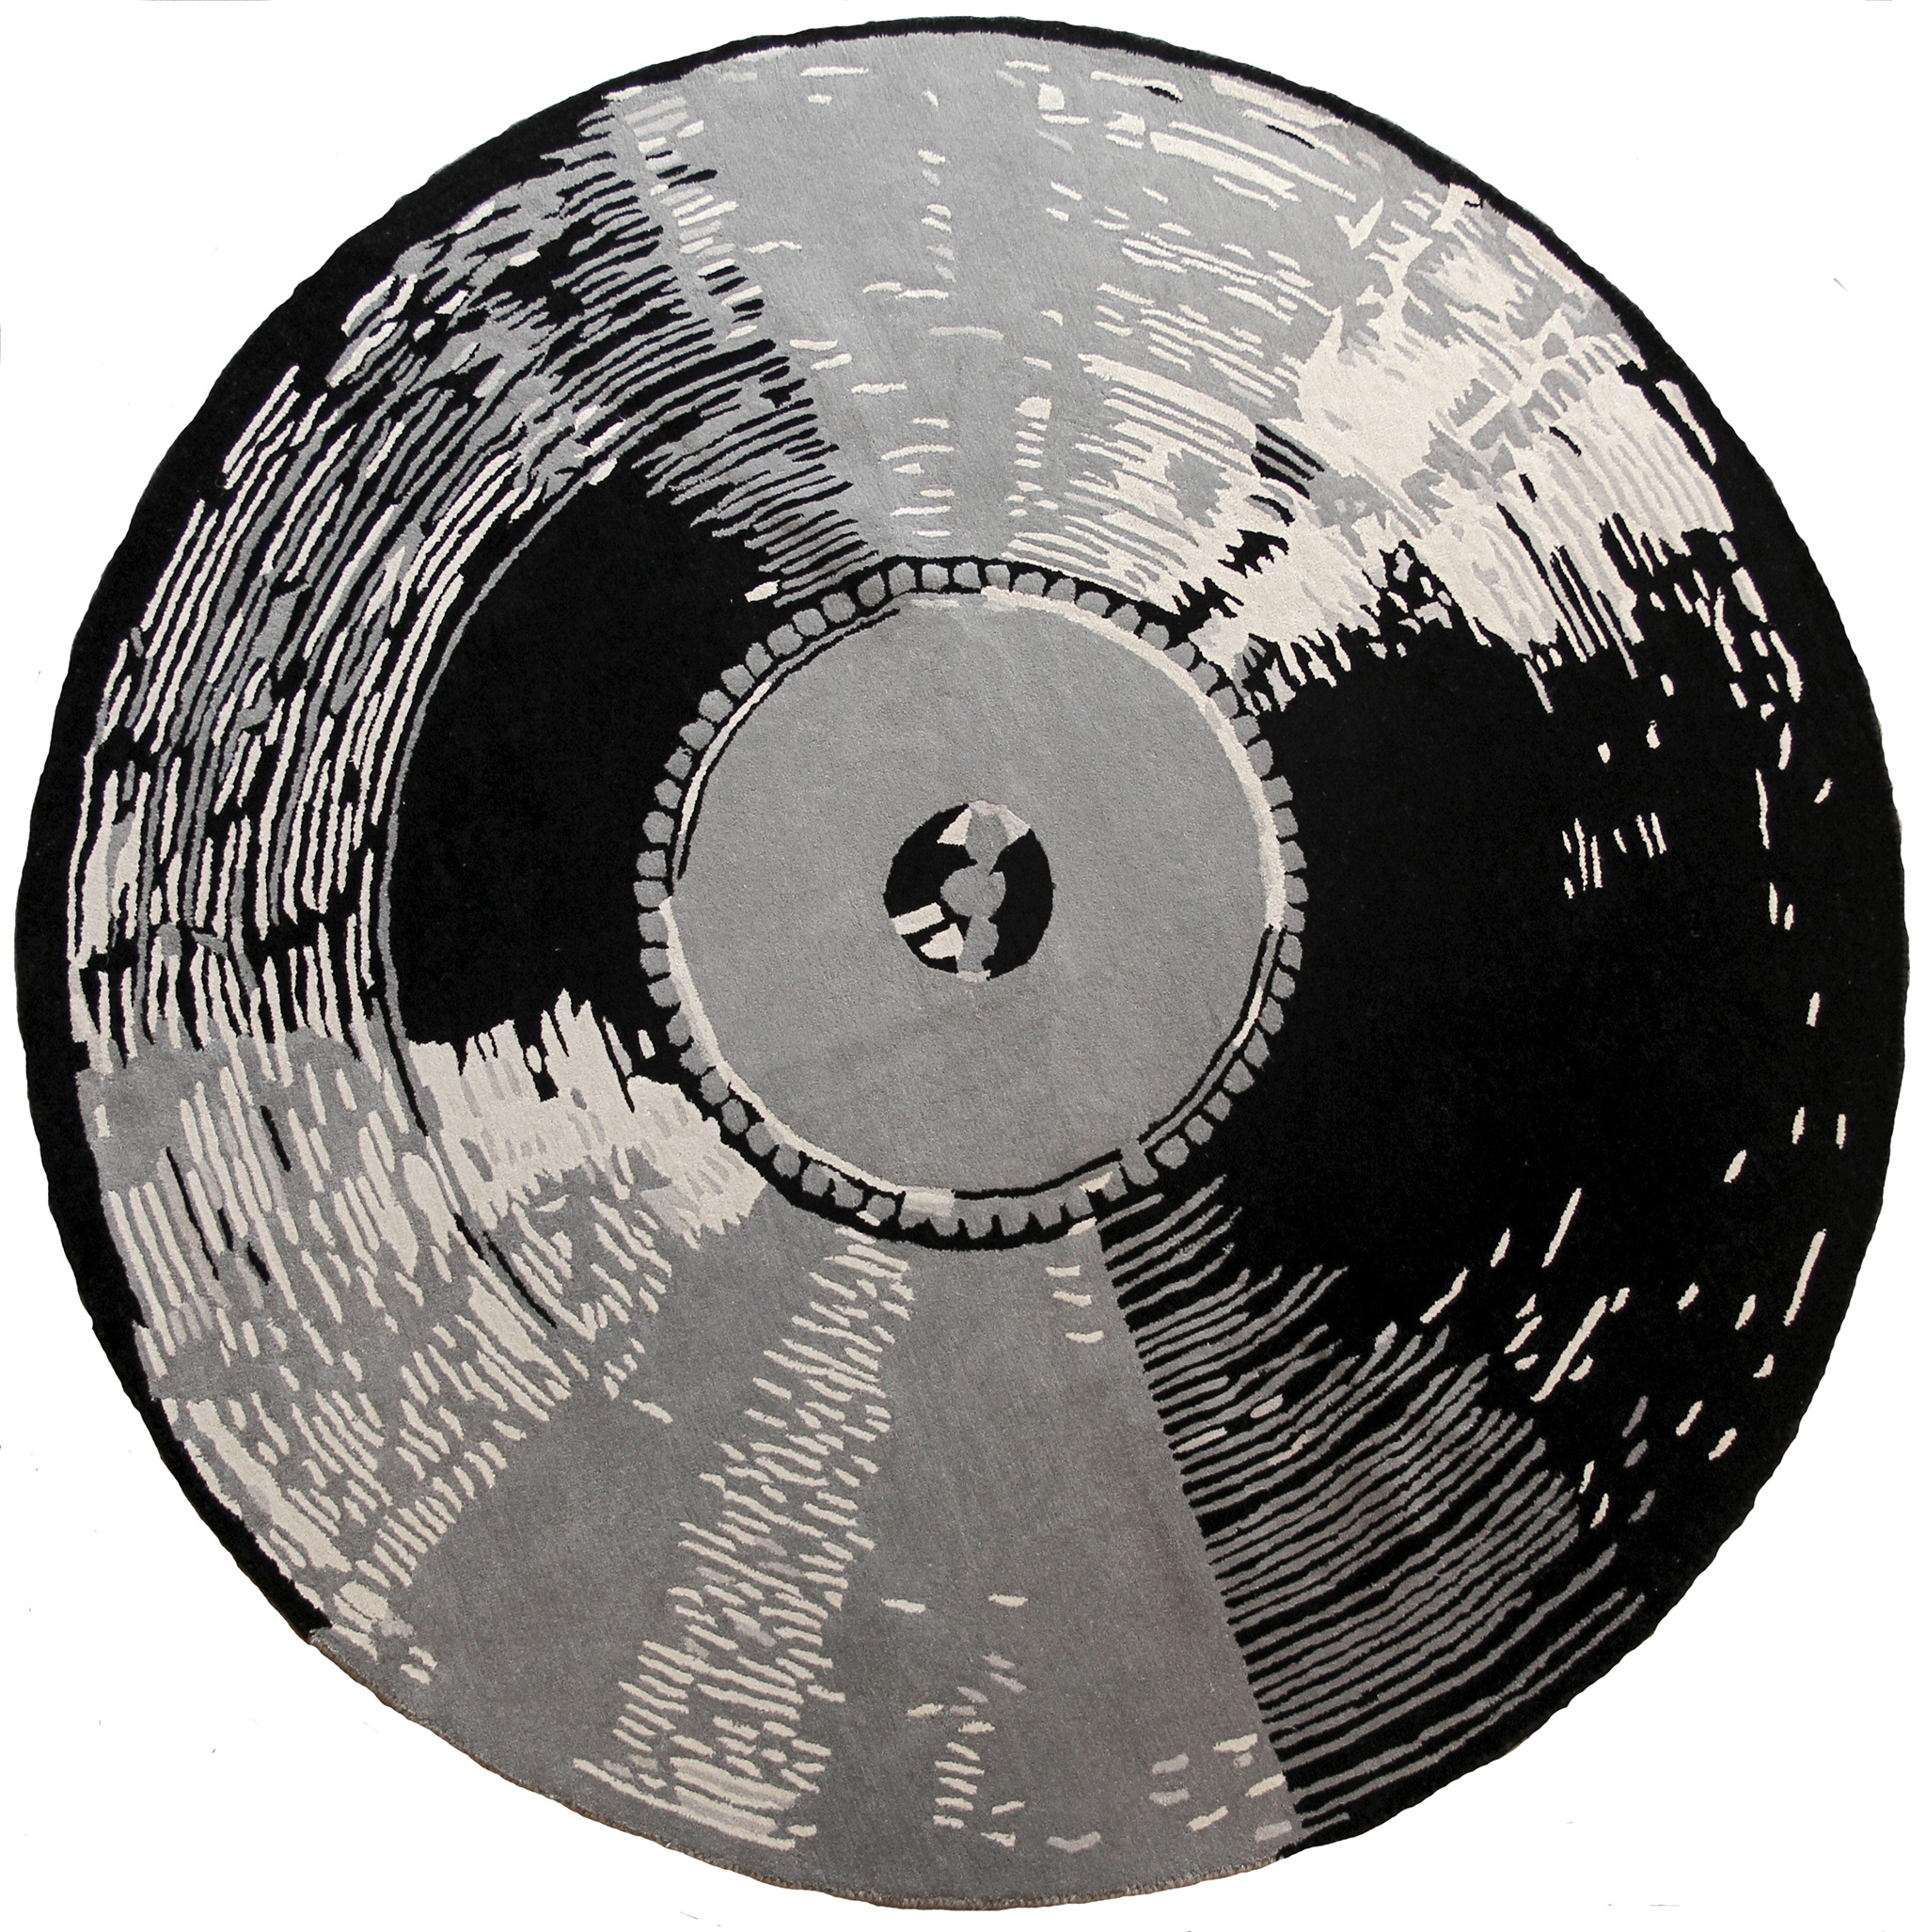 'Vinyl' by Kush Rugs shown in colourway 'Classic.' | Photograph courtesy of Kush Rugs.